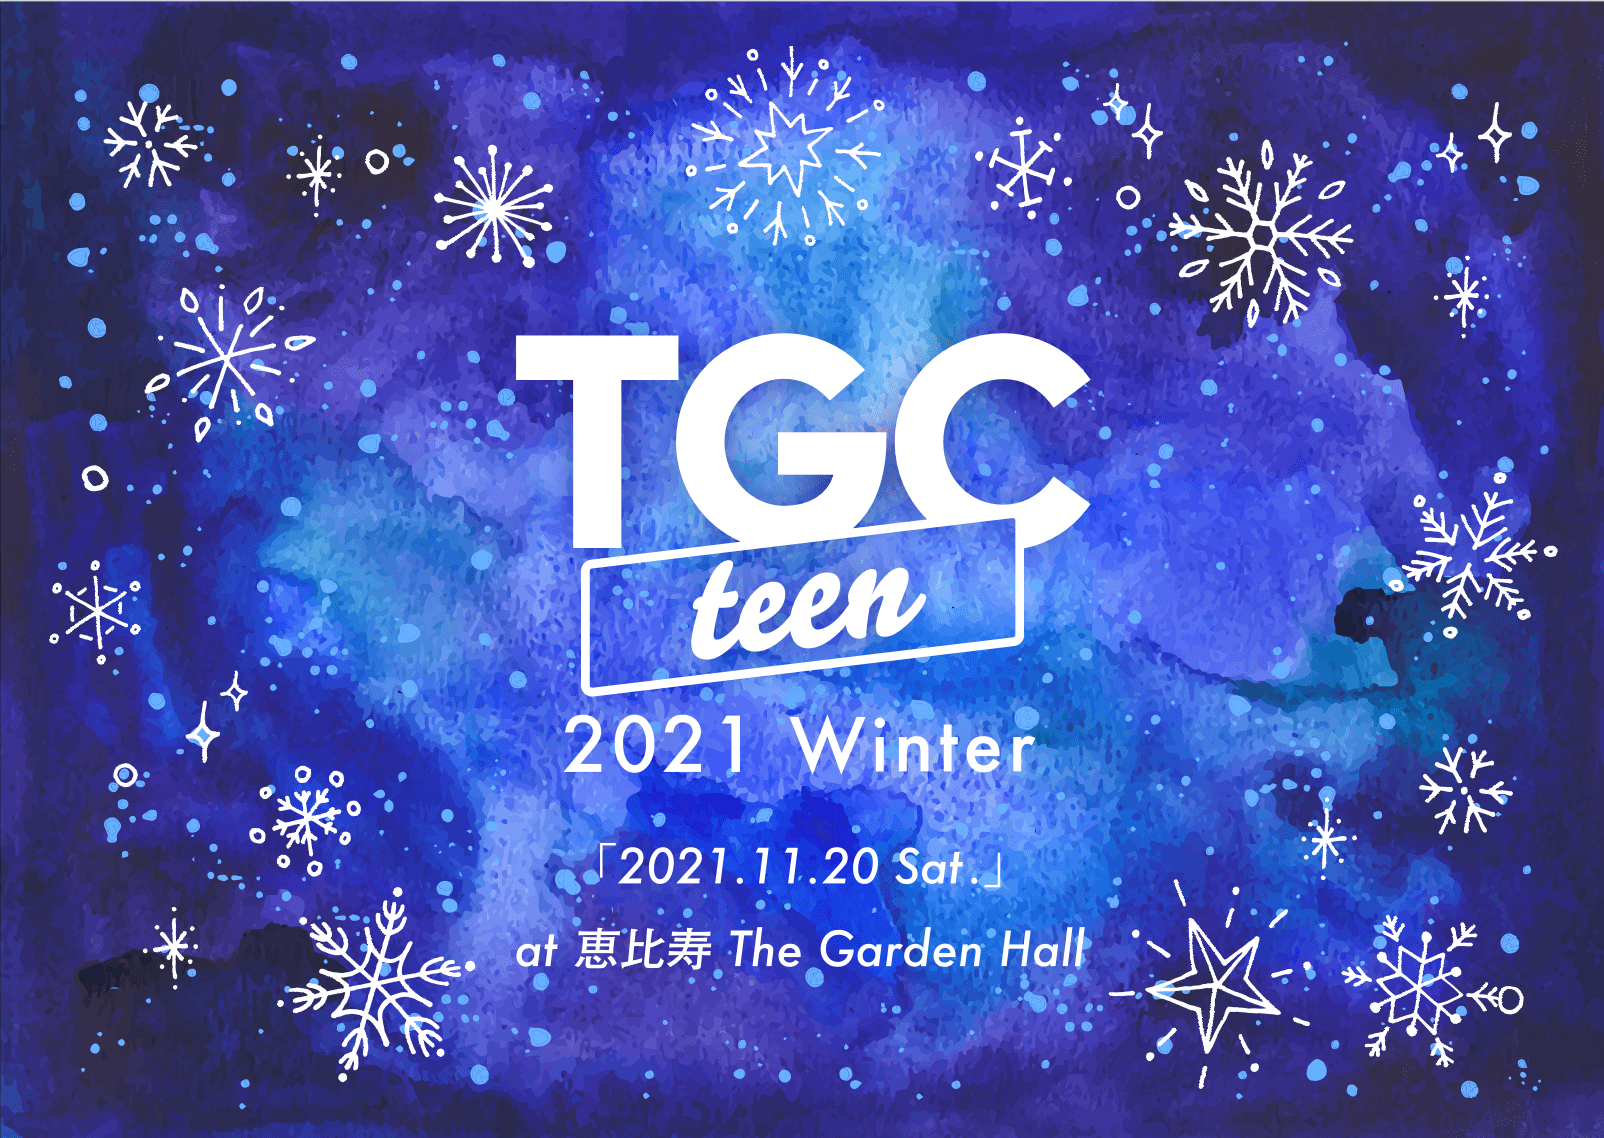 TGC teen 2021 Winter